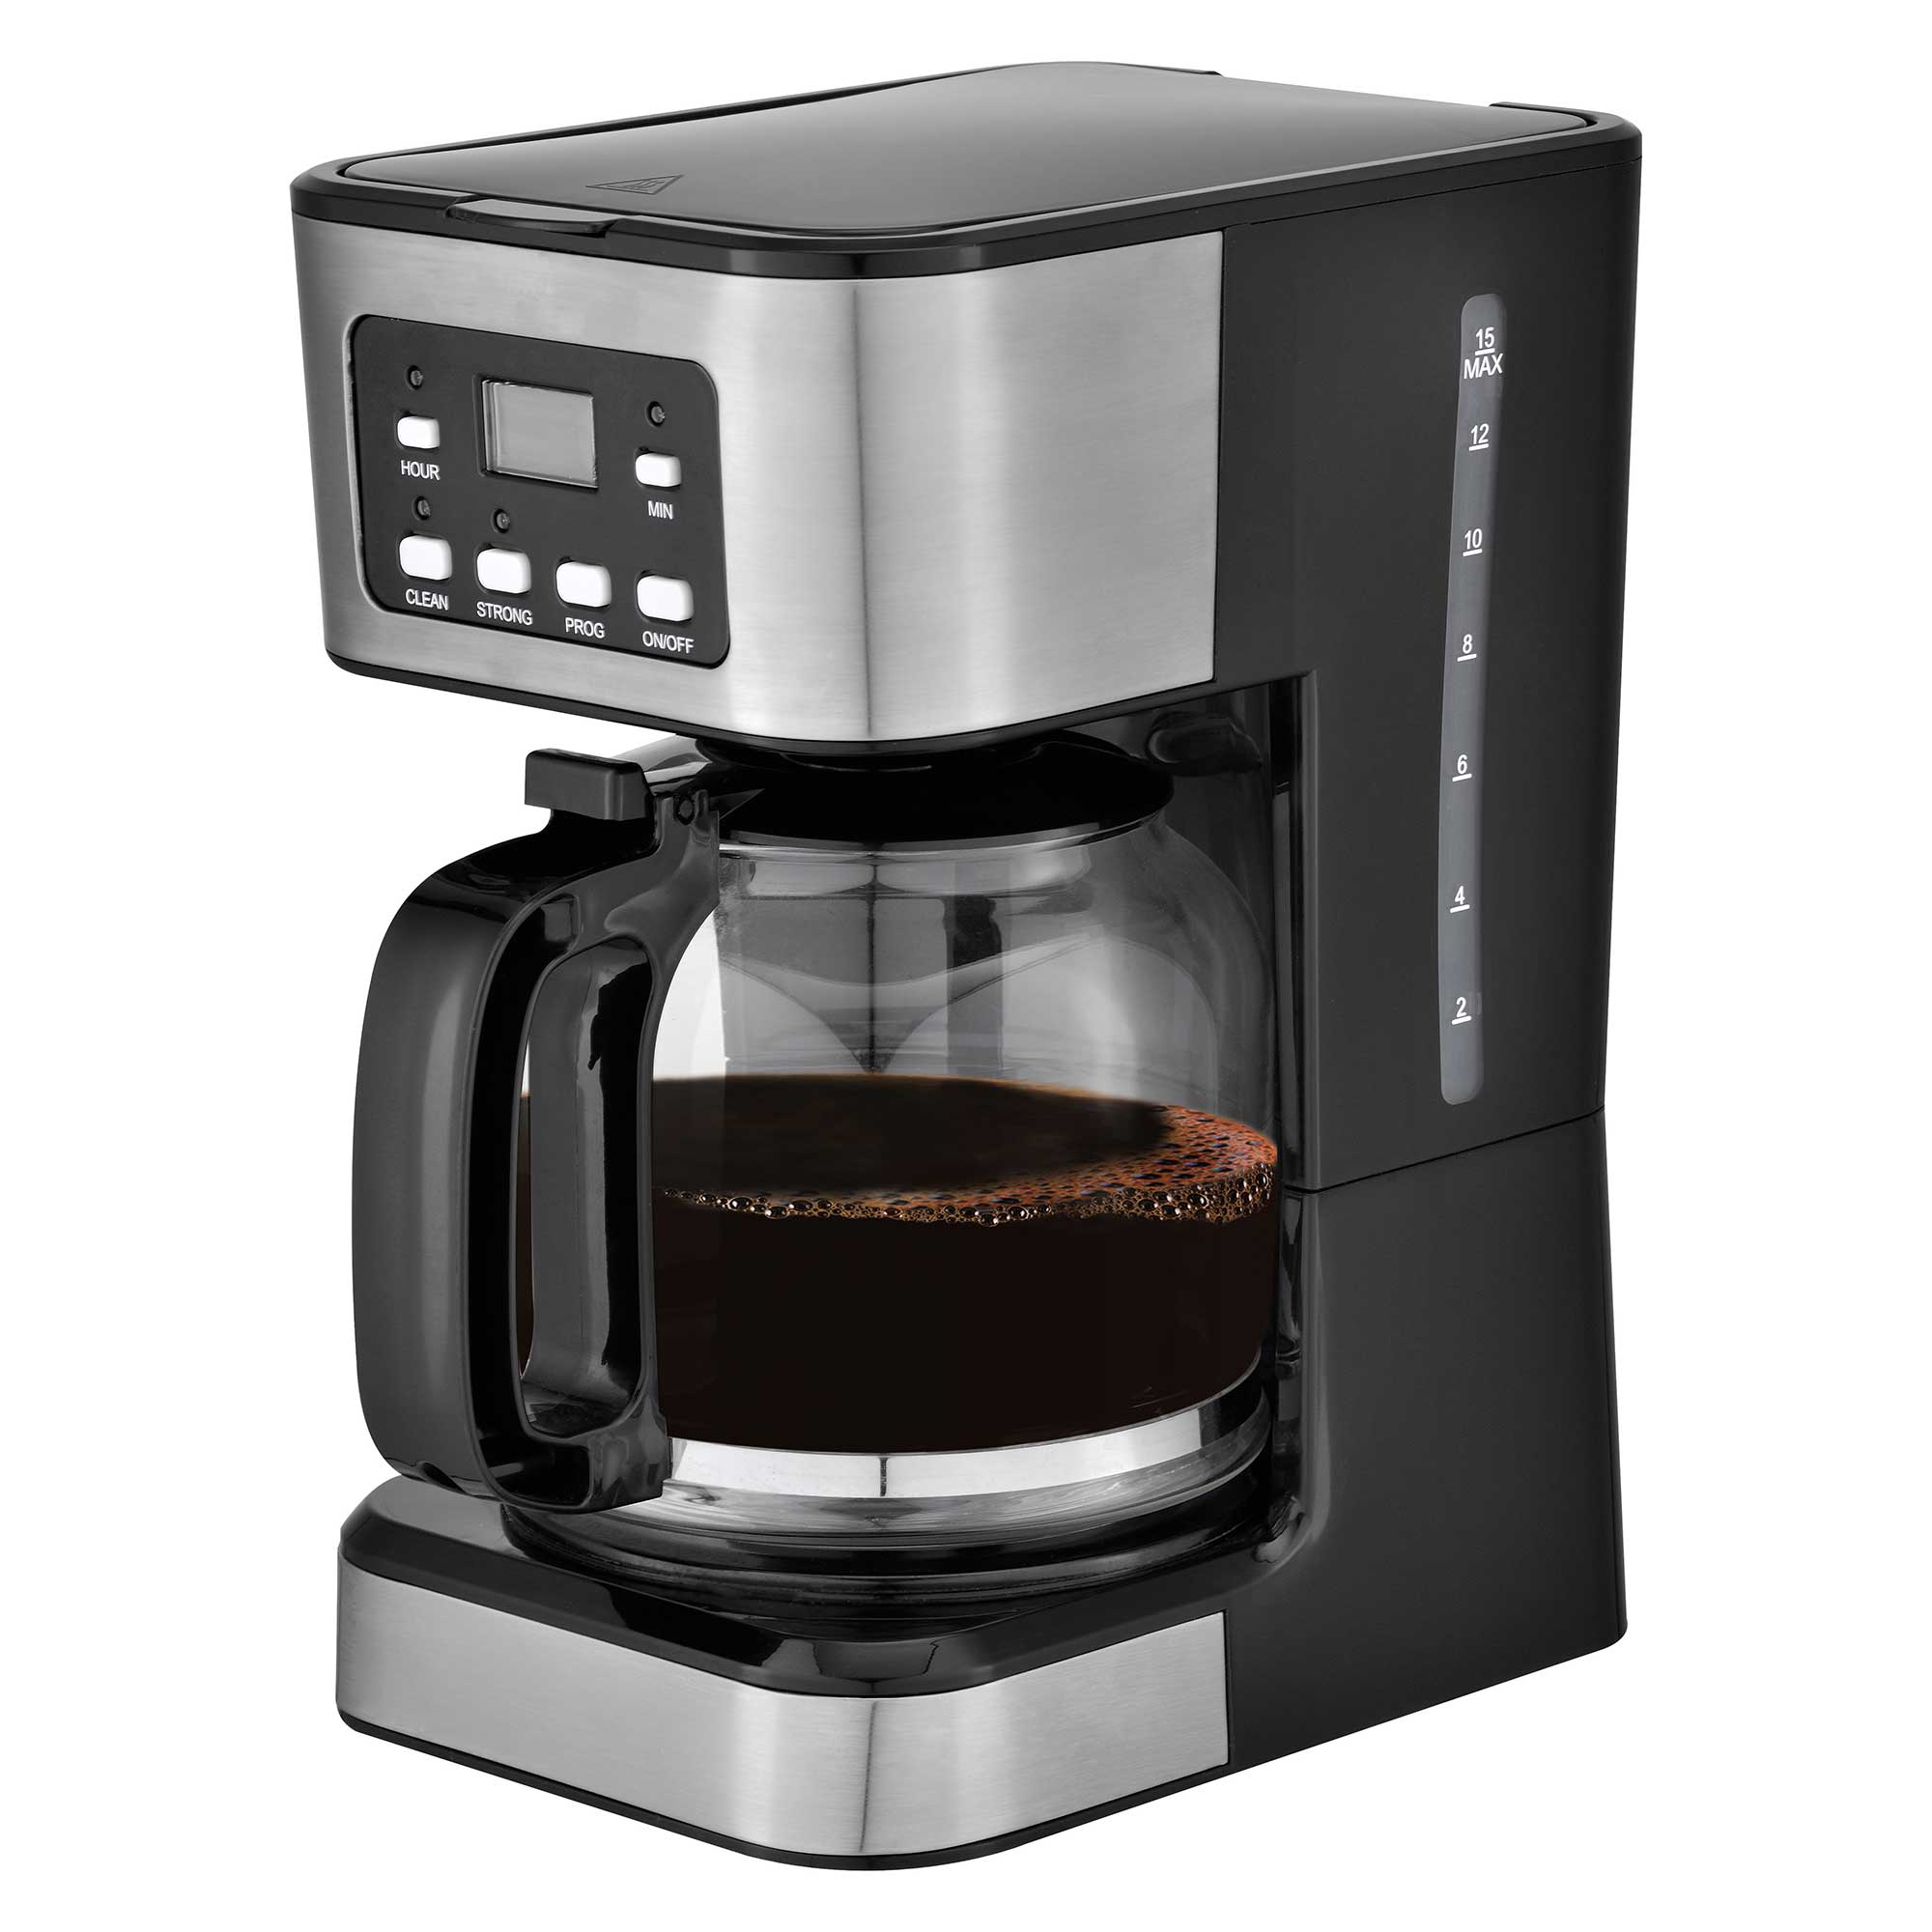 Brentwood TS-222BK 12-Cup Digital Coffee Maker, Black